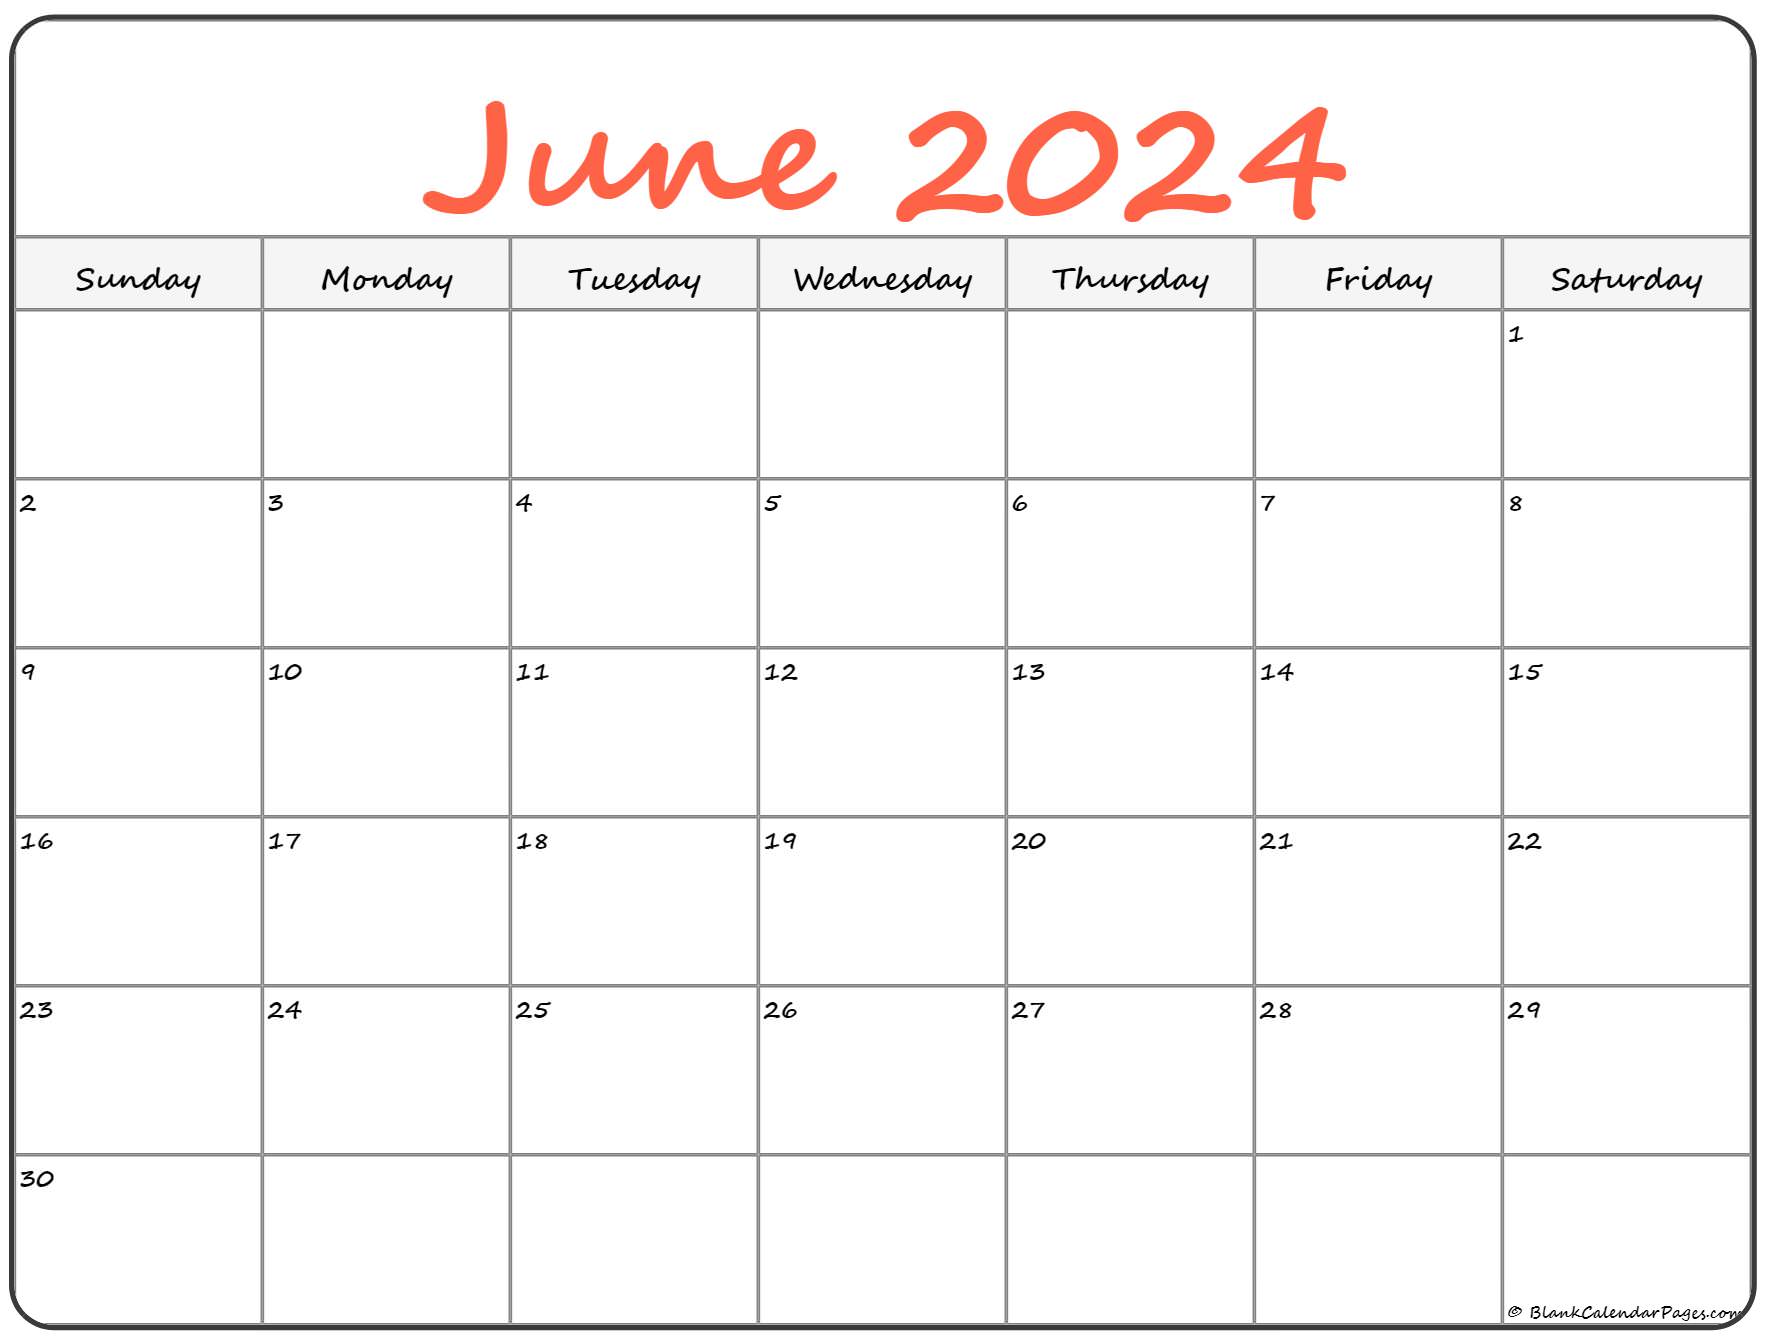 printable-calendar-june-2023-printable-calendar-2023